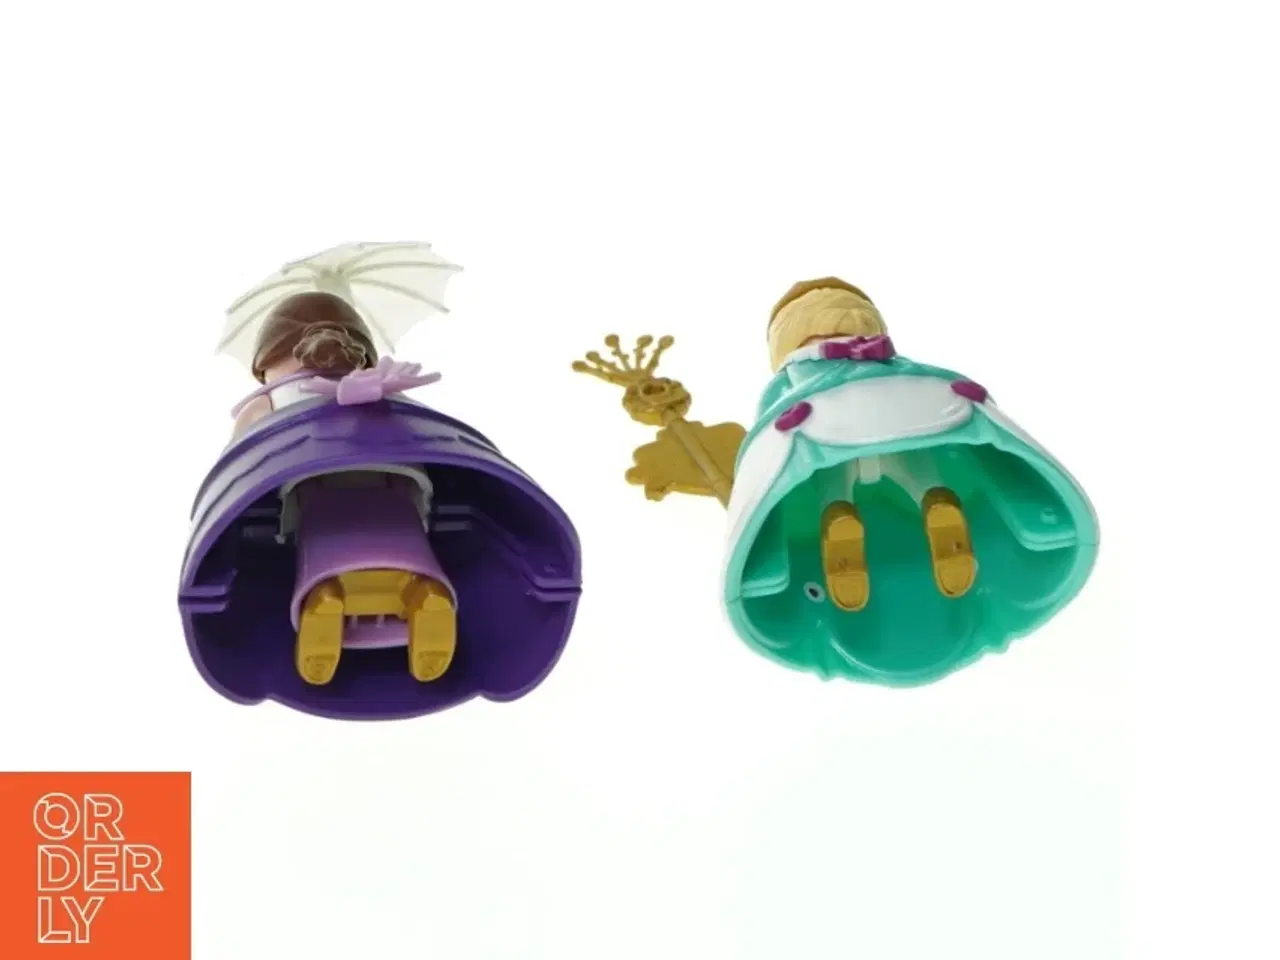 Billede 3 - Playmobil figurer fra Playmobil (str. 7 x 5 cm)